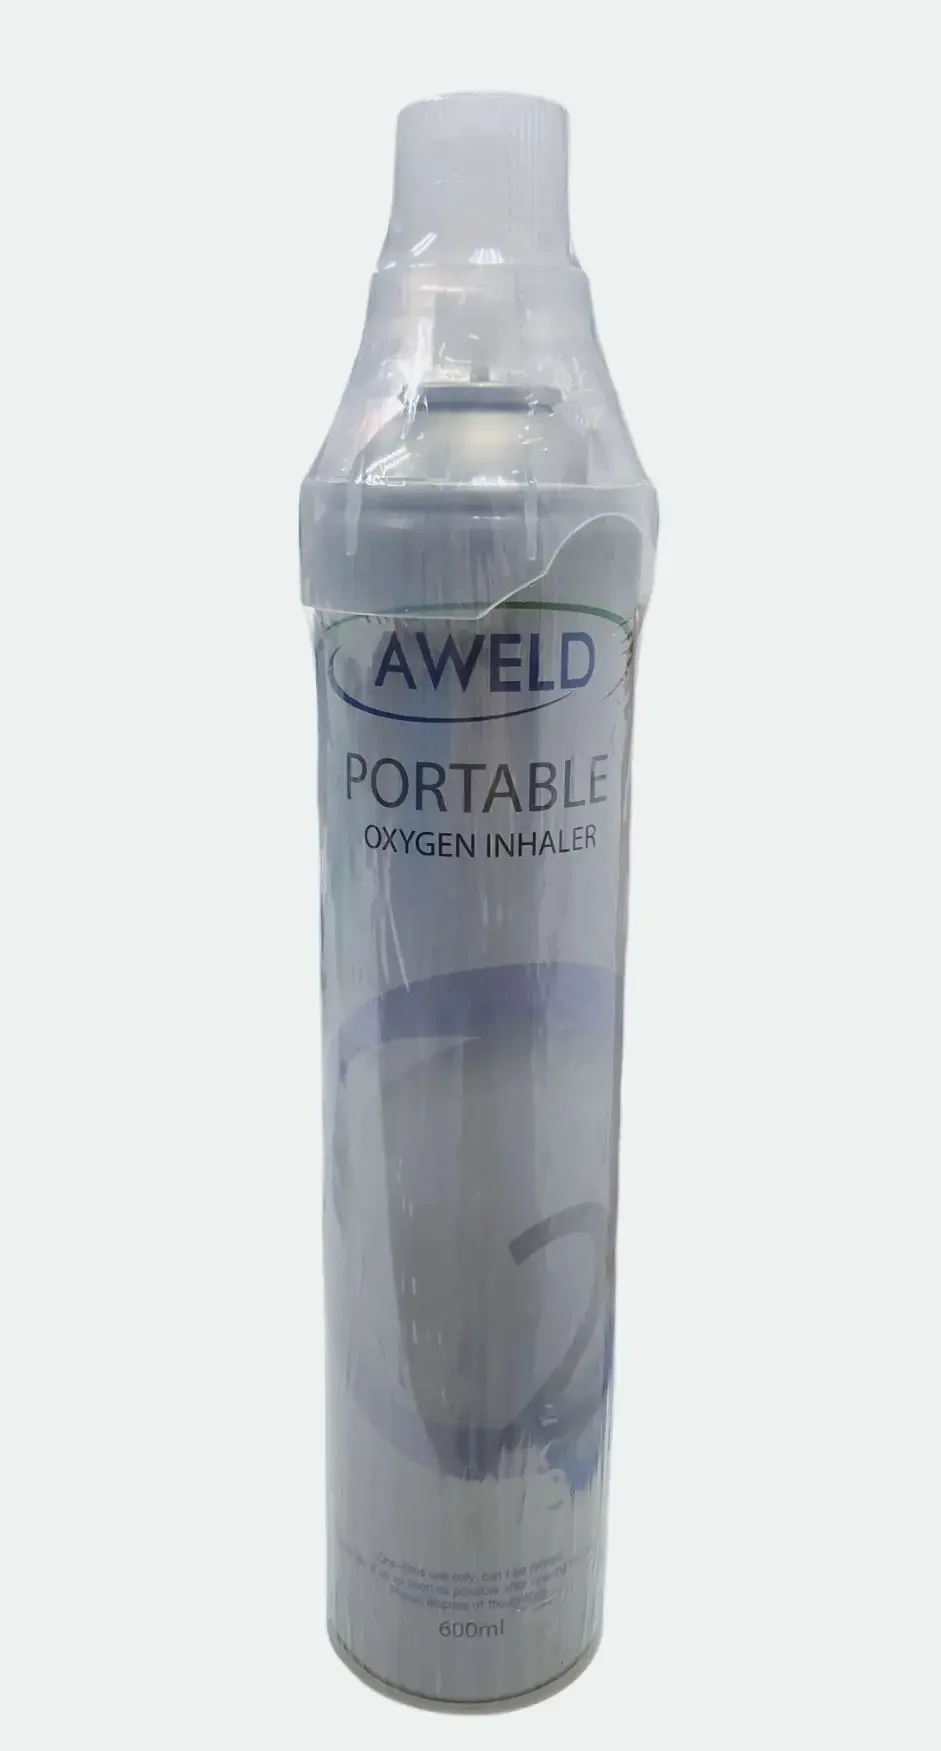 Aweld Portable Oxygen Inhaler 600ml